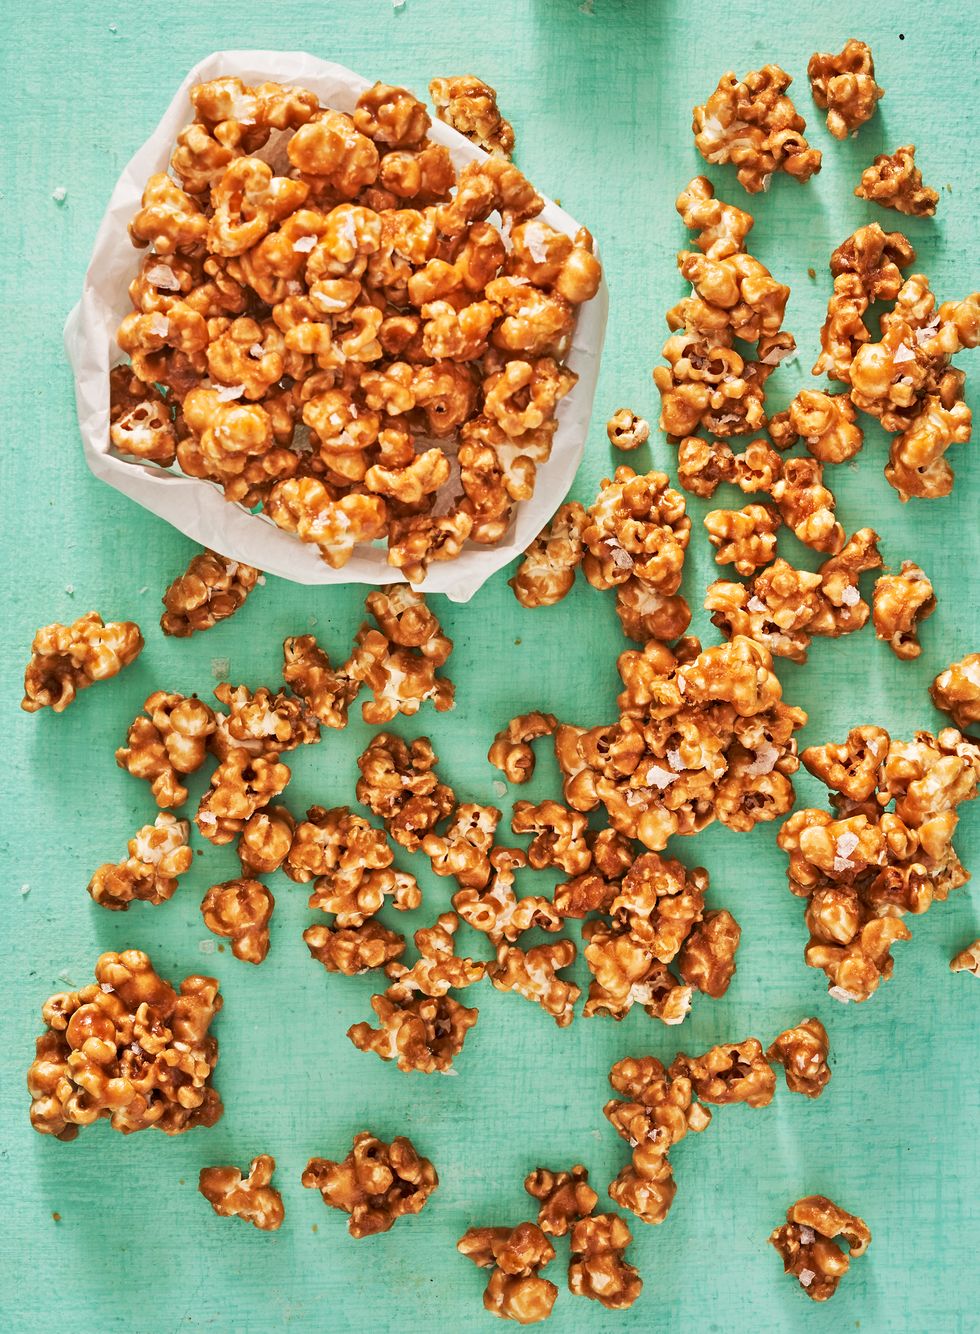 Best Caramel Popcorn Recipe - How to Make Caramel Popcorn